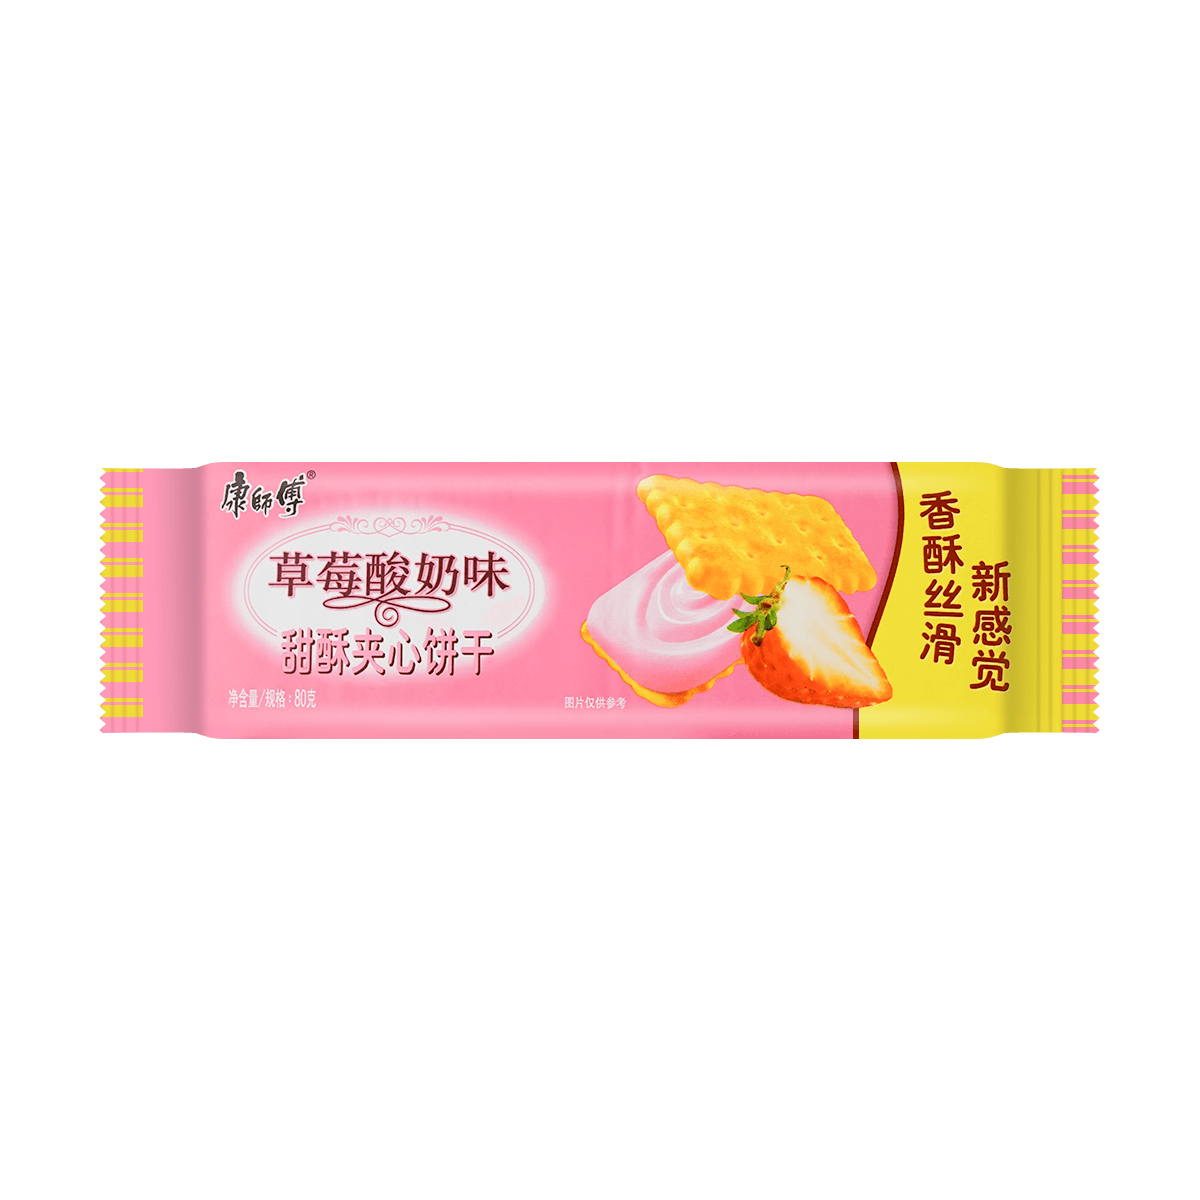 Yamibuy.com:Customer reviews:Sweet Crisp Sandwich Biscuits Strawberry Yogurt Flavor 80g